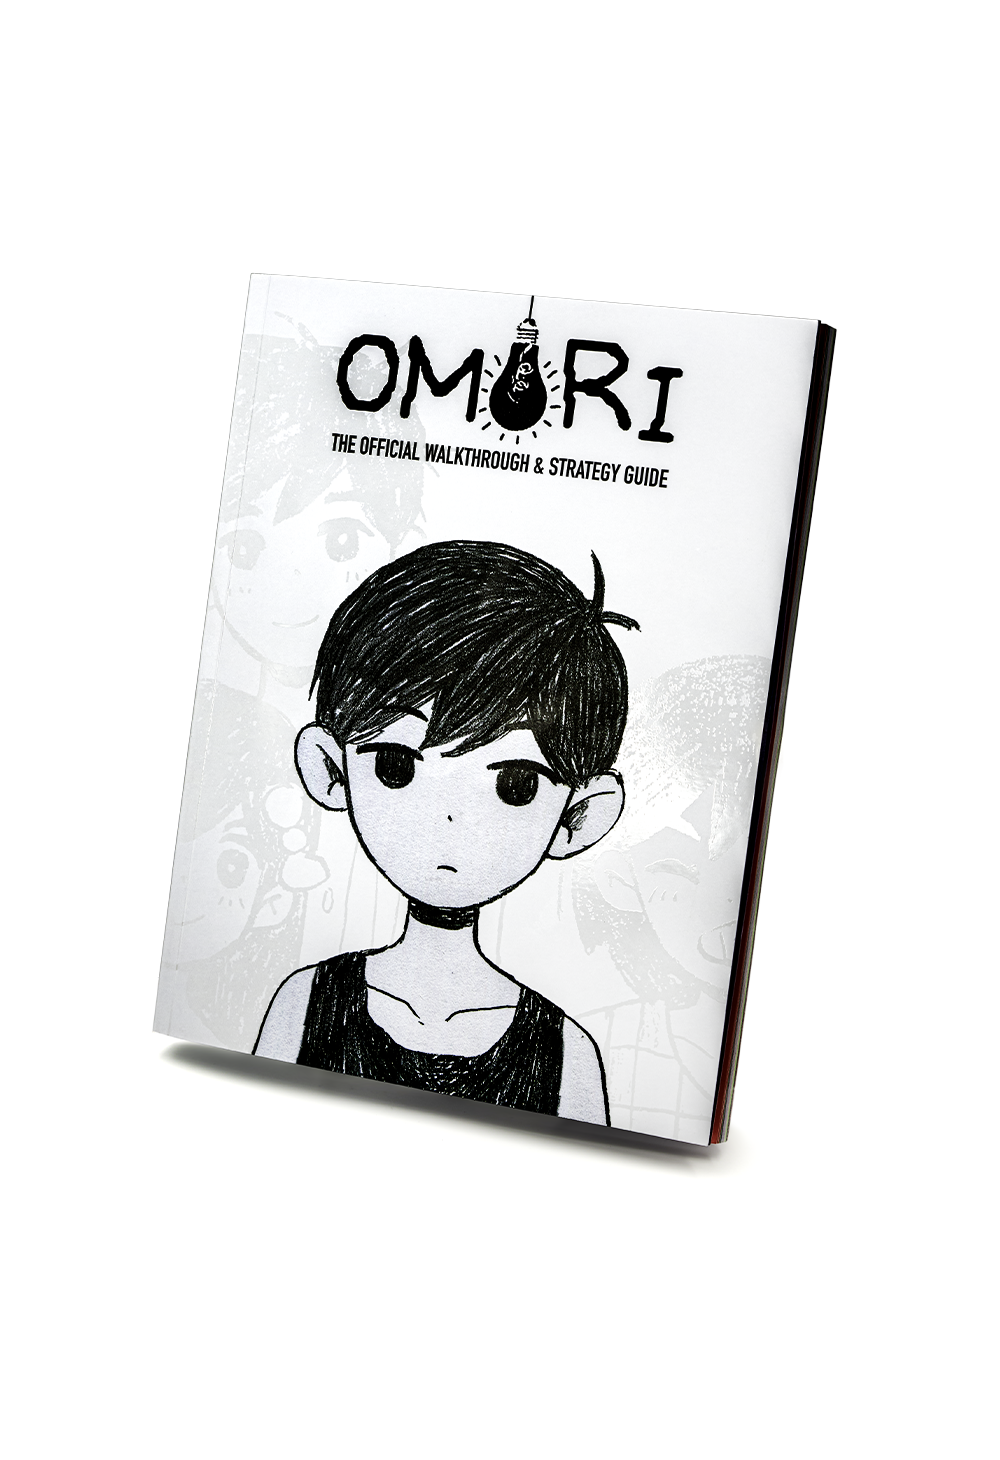 OMORI Standard Edition – OMOCAT